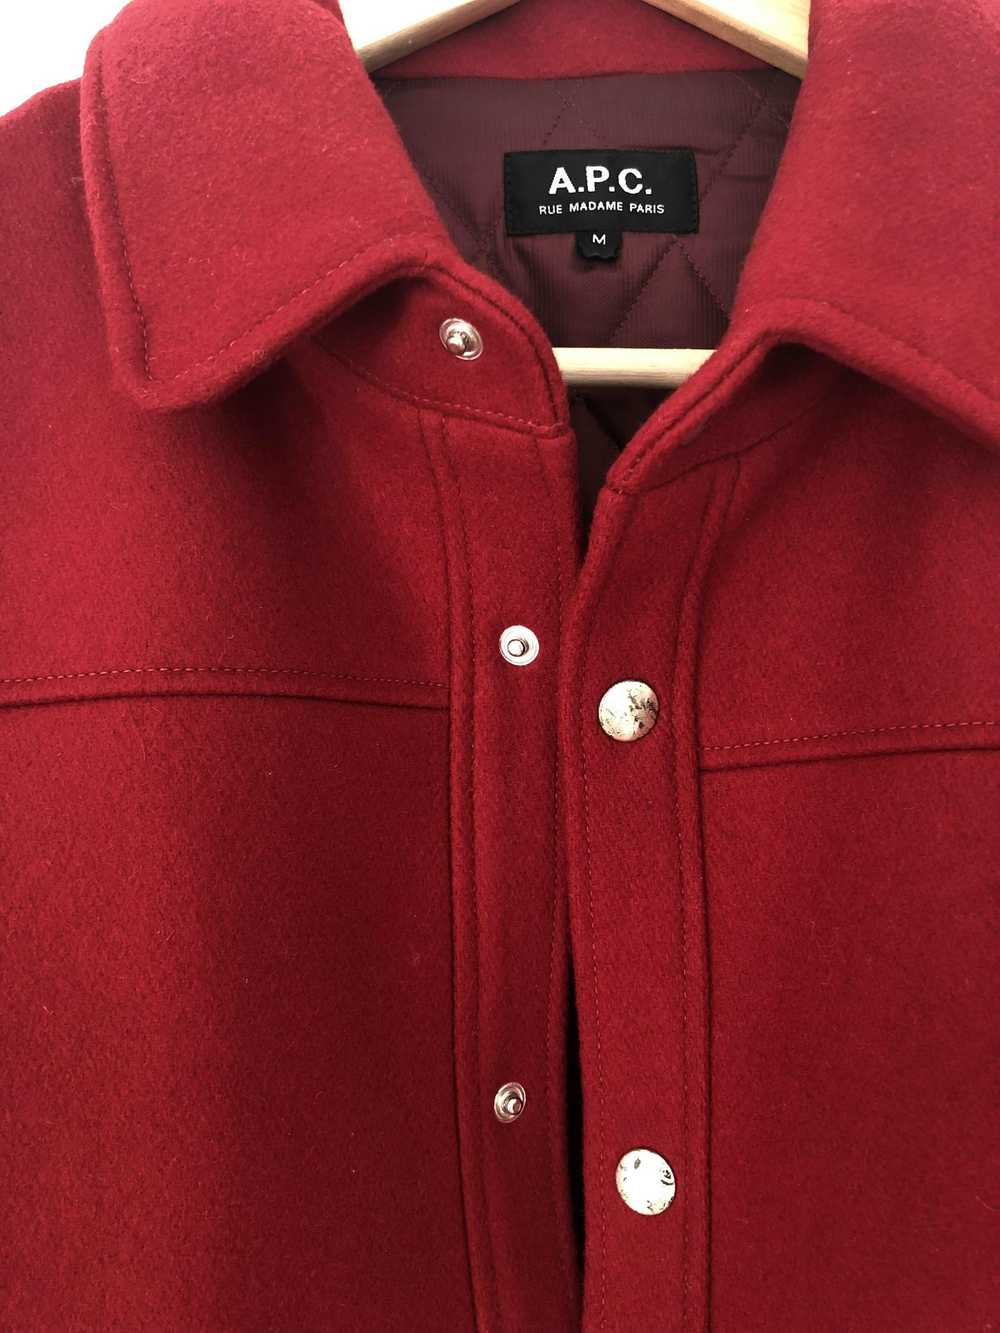 A.P.C. Red APC Jacket - Paulo Blouson - image 2